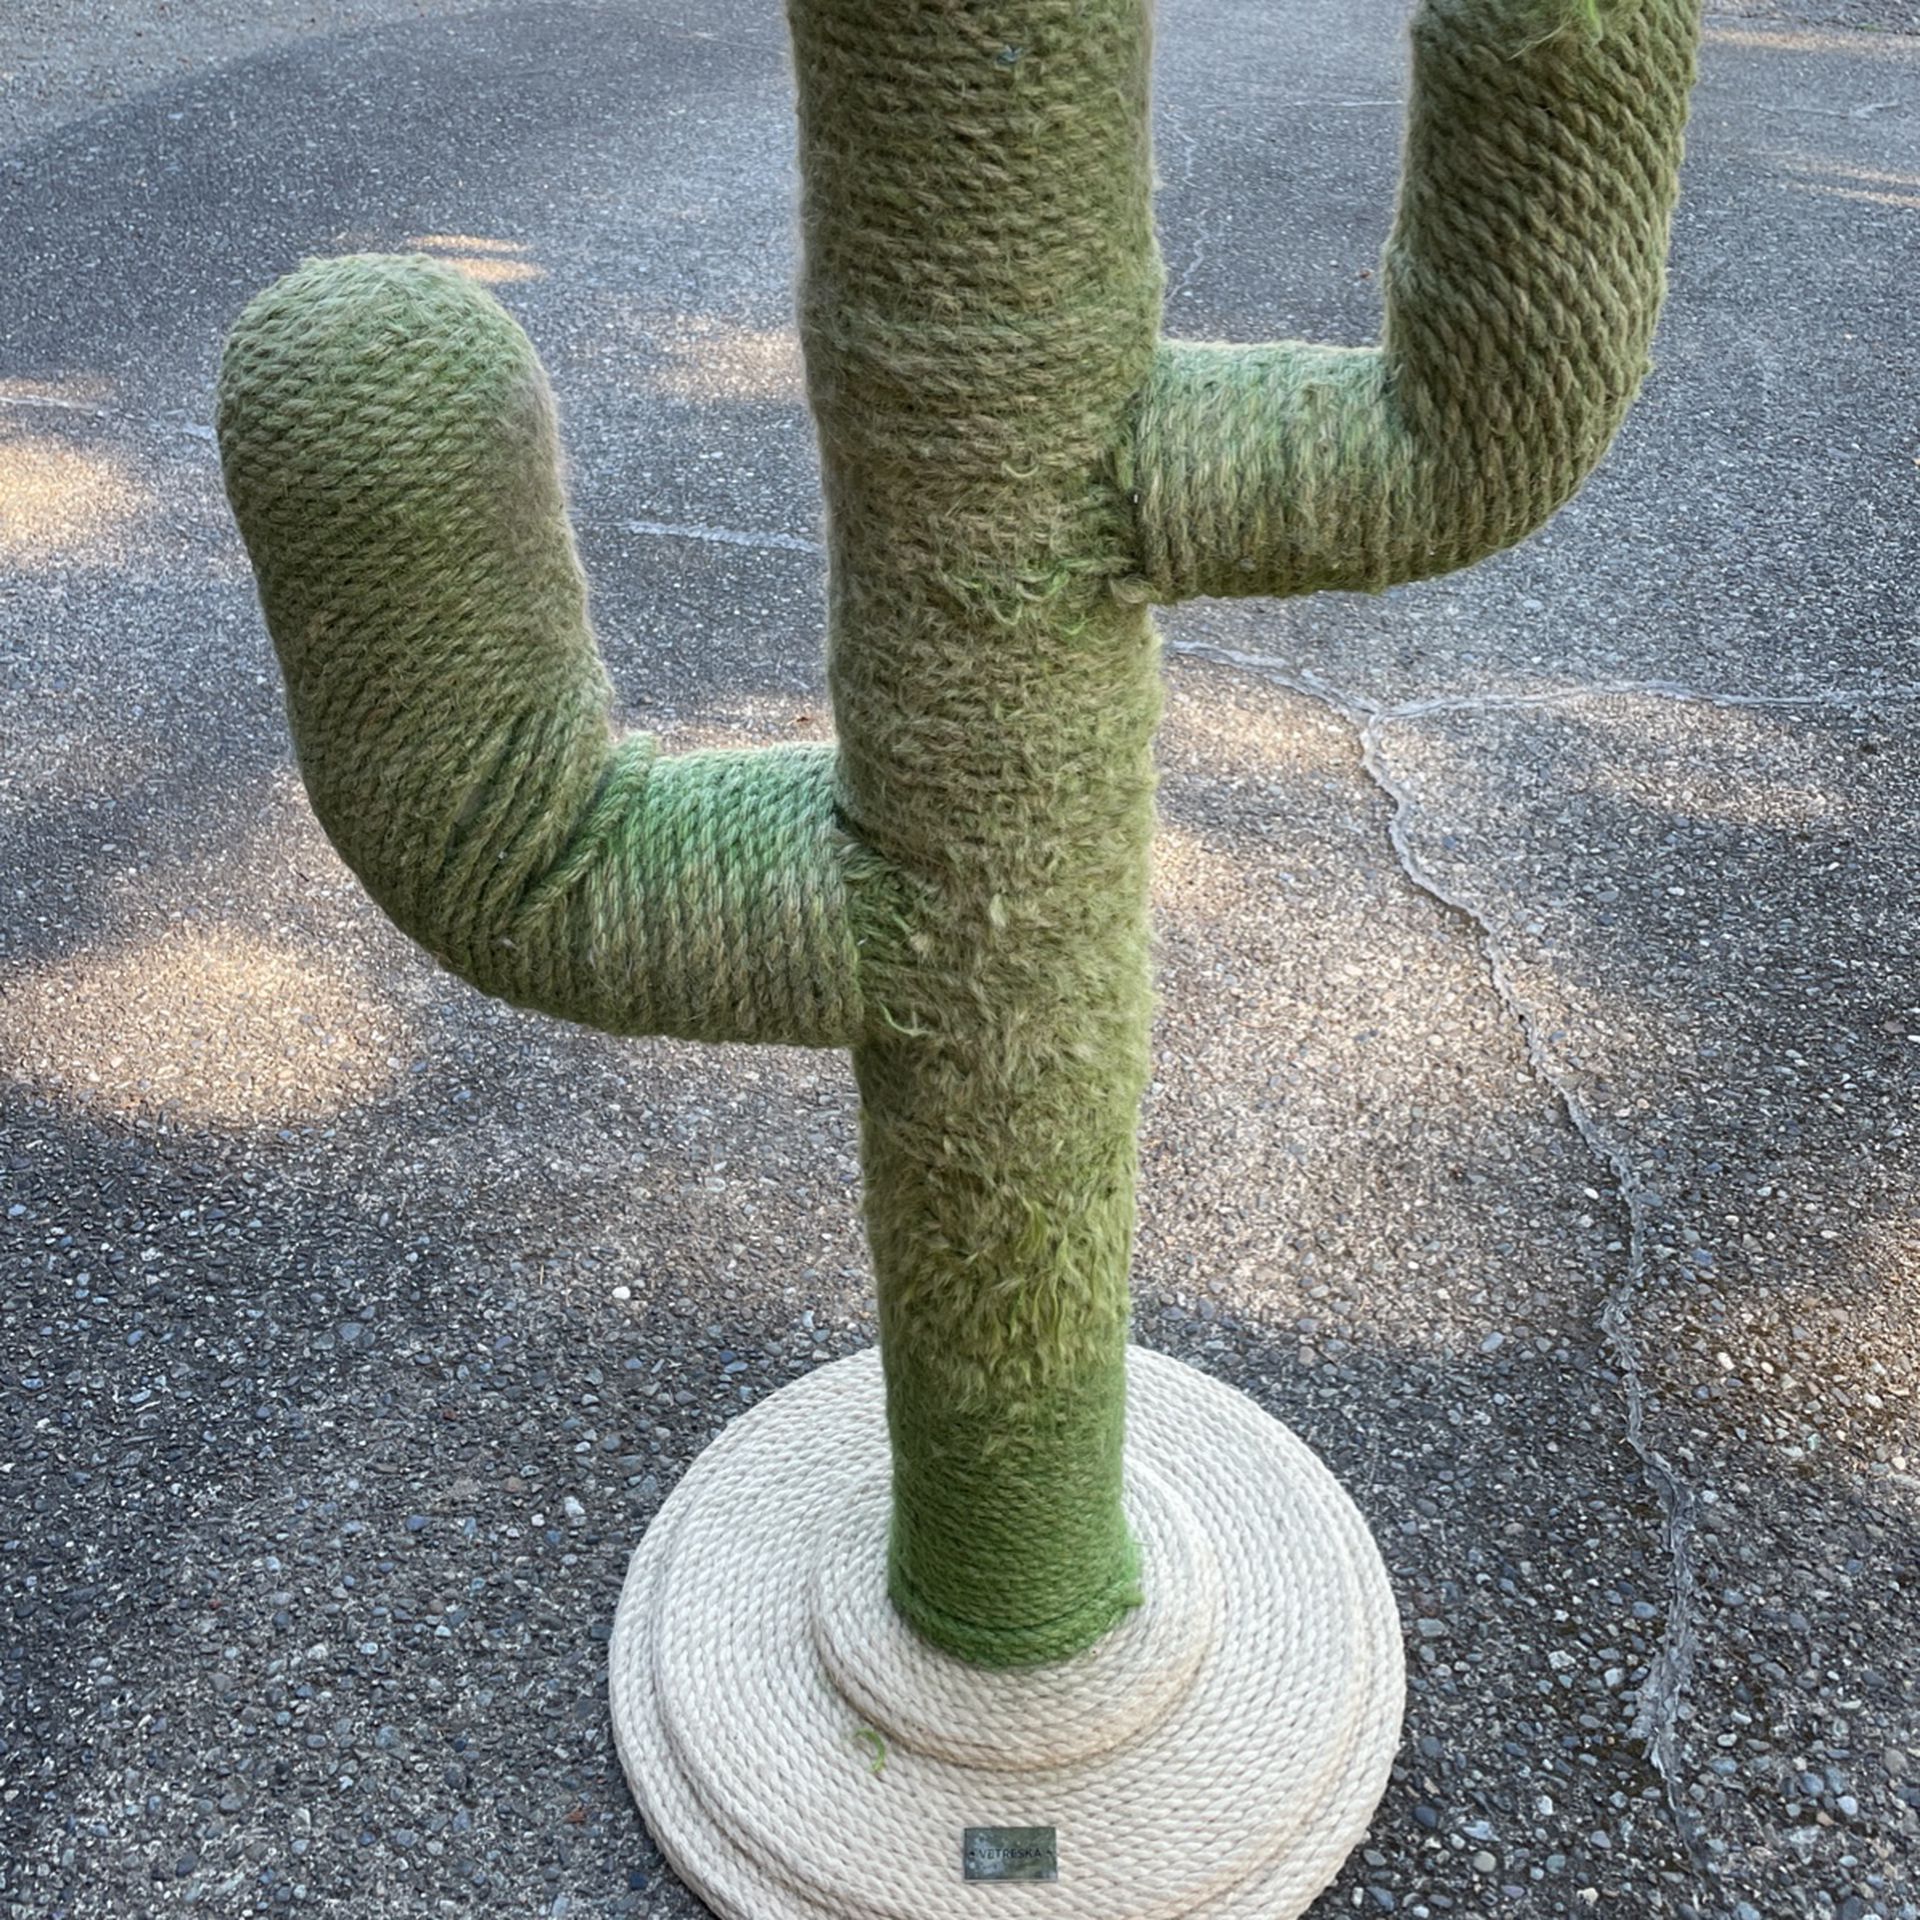  Vetreska Cactus Shaped Cat Scratcher Tree